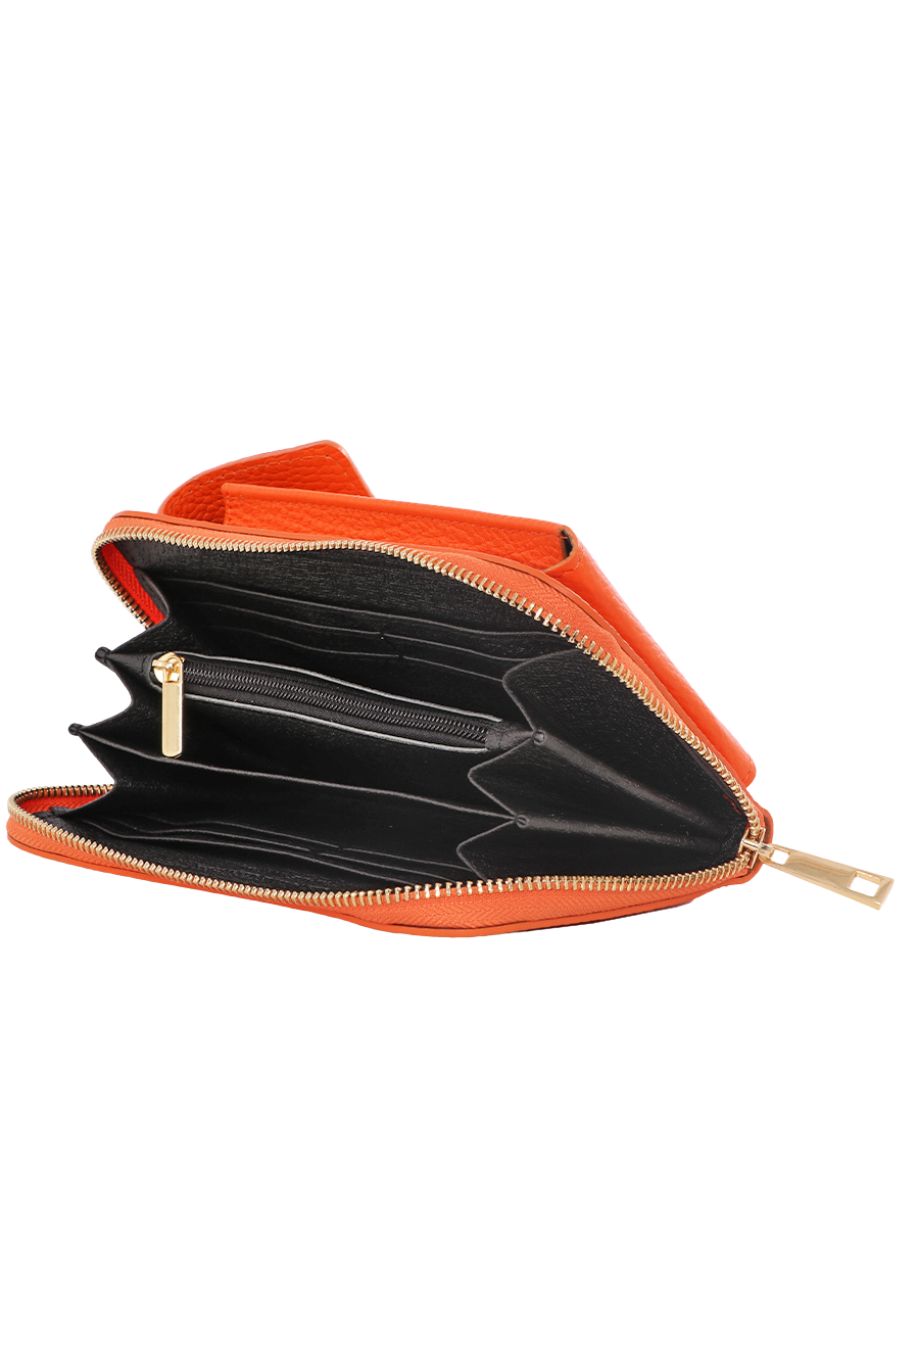 Orange Genuine Italian Leather Mobile Phone Wallet Combo Bag